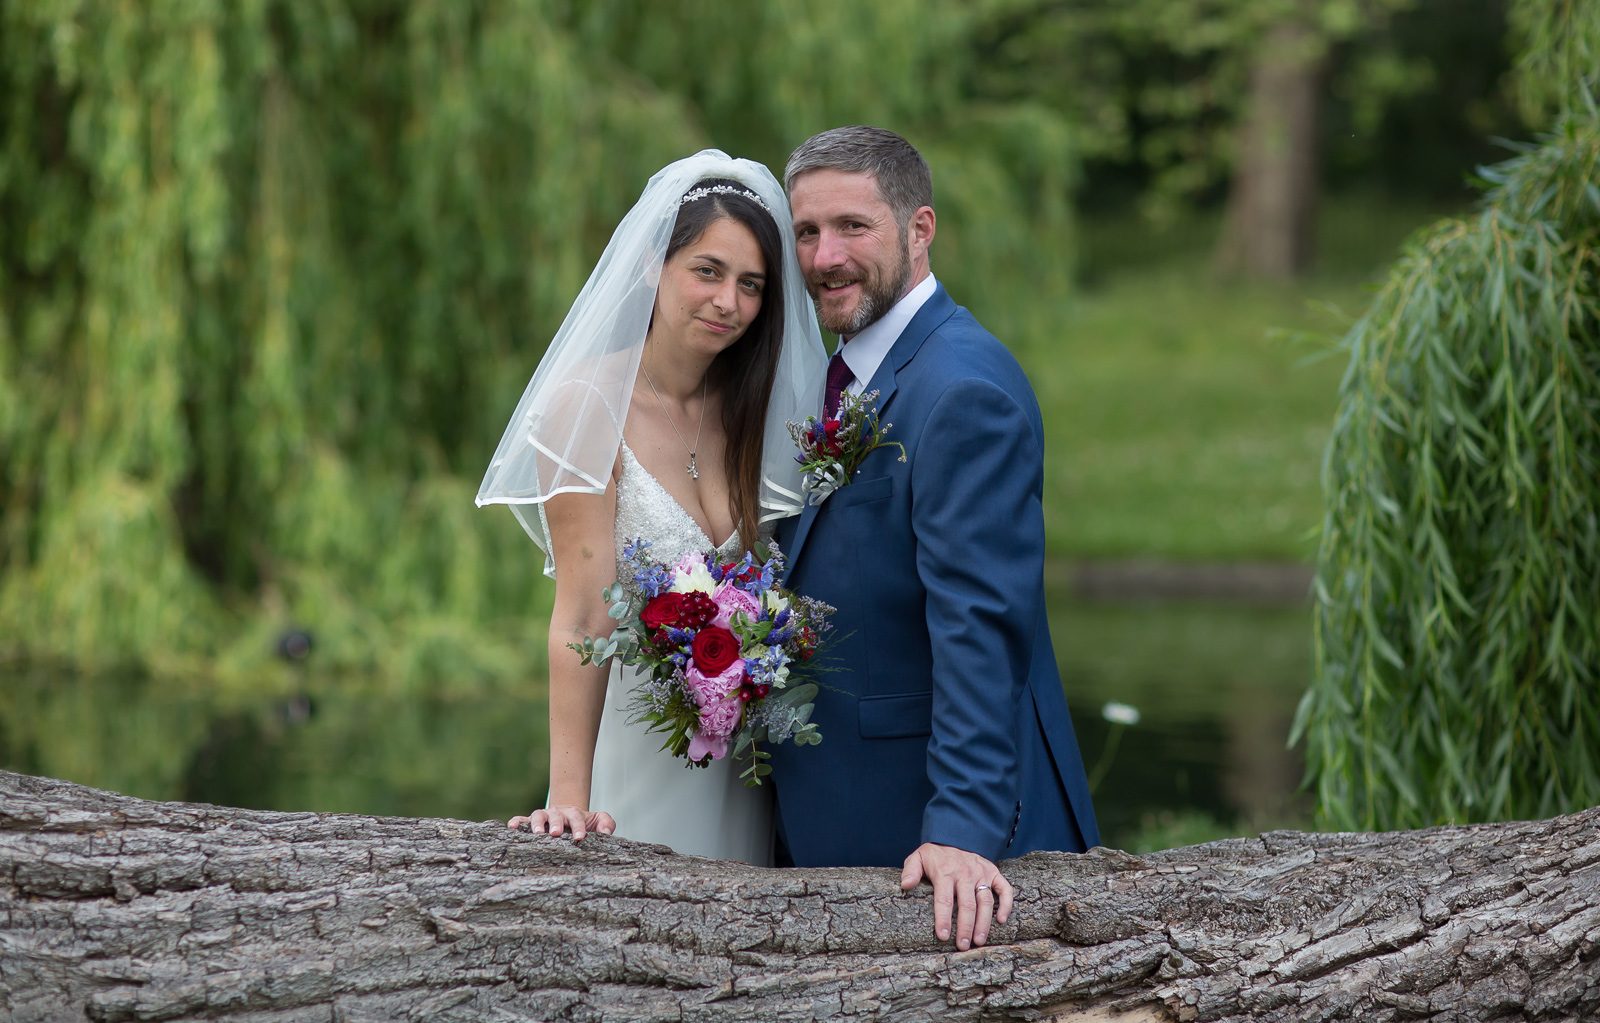 Bride and groom by log in Regents Park London